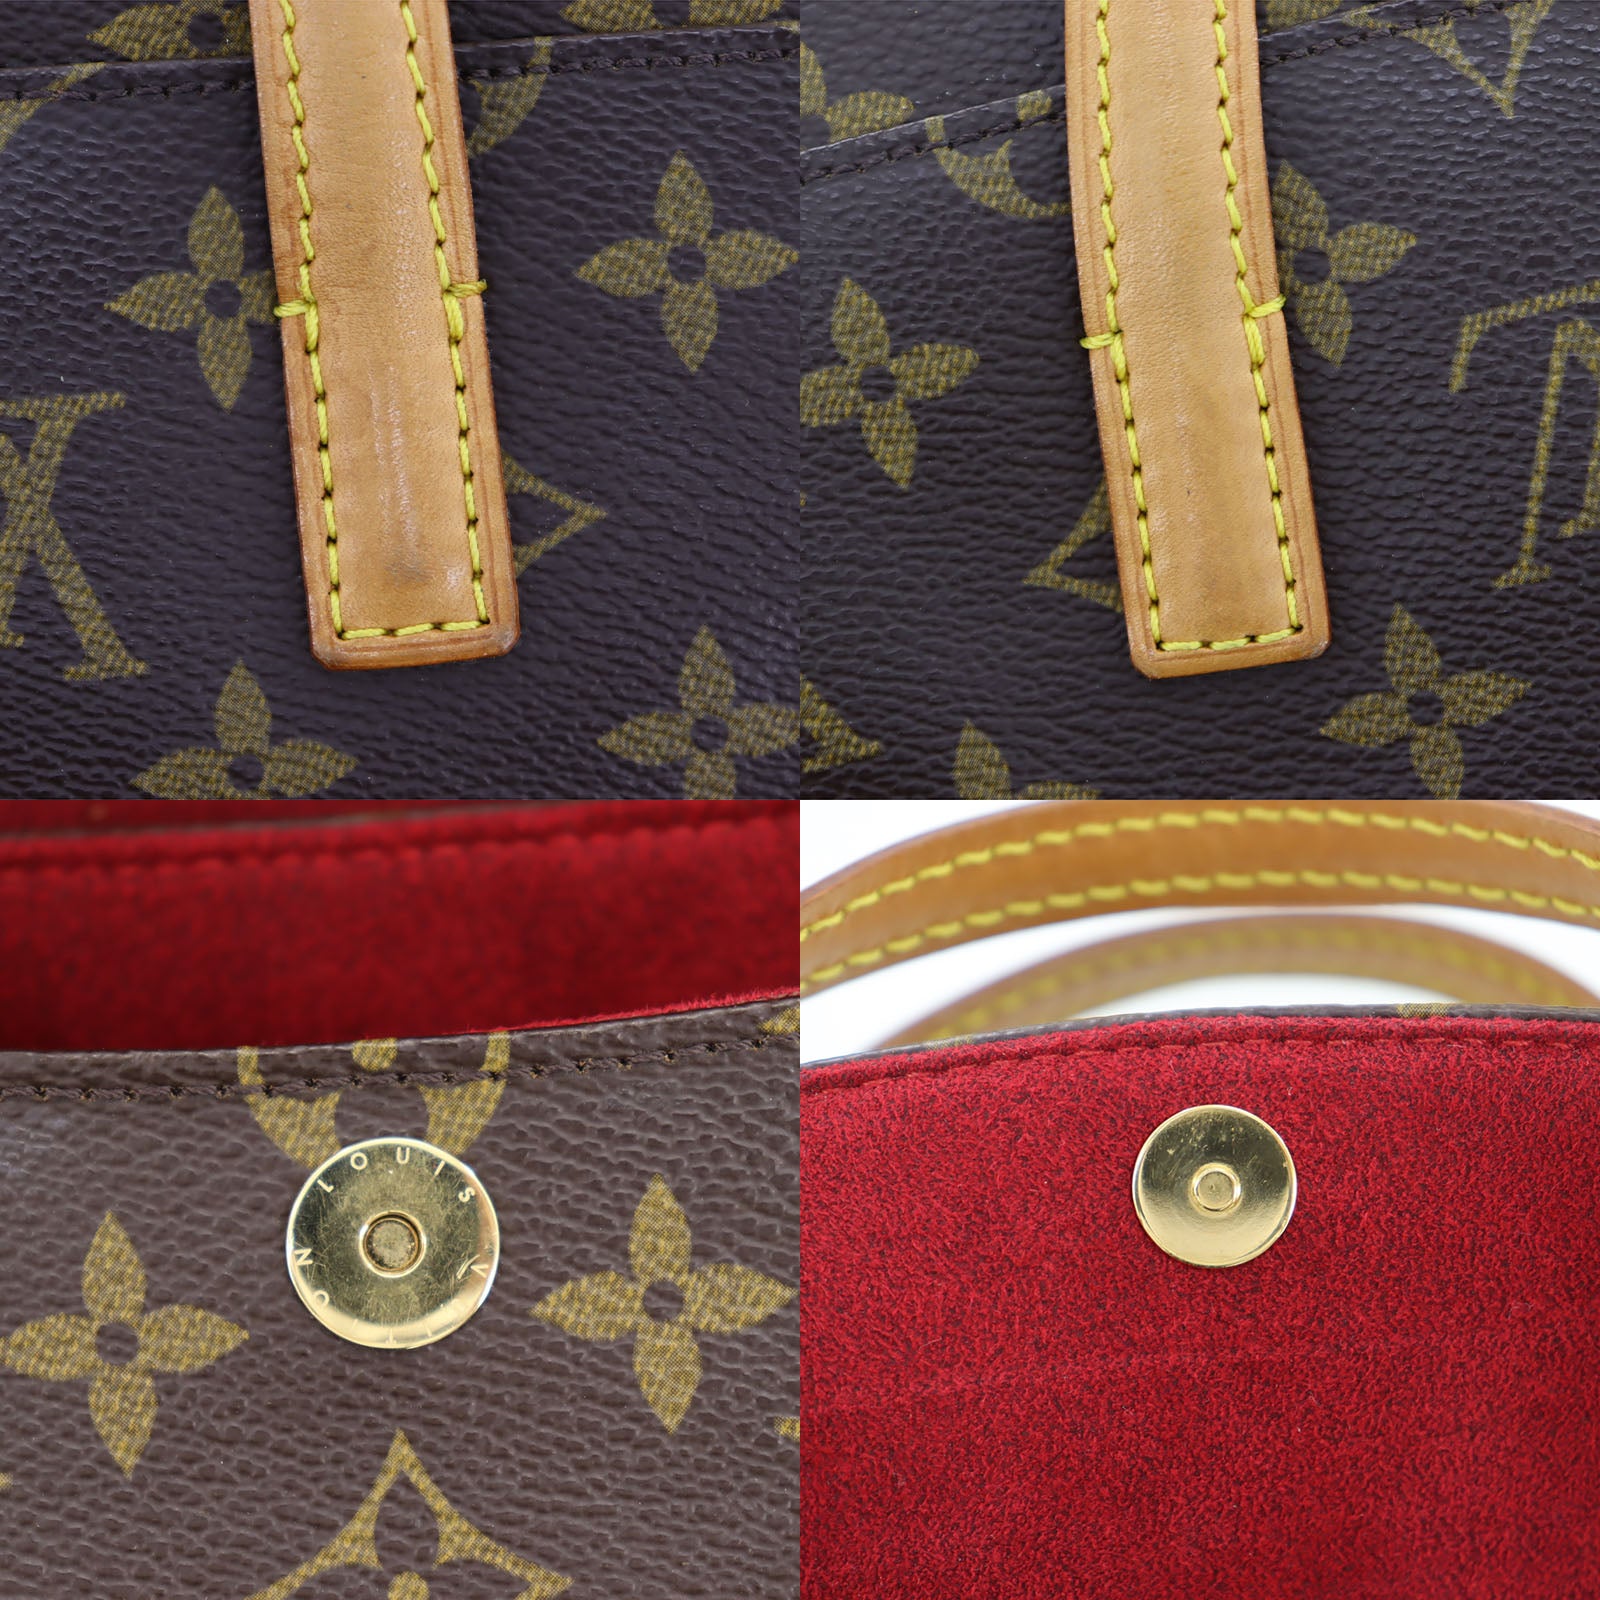 LOUIS VUITTON Monogram Sonatine Handbag Bag Used From Japan